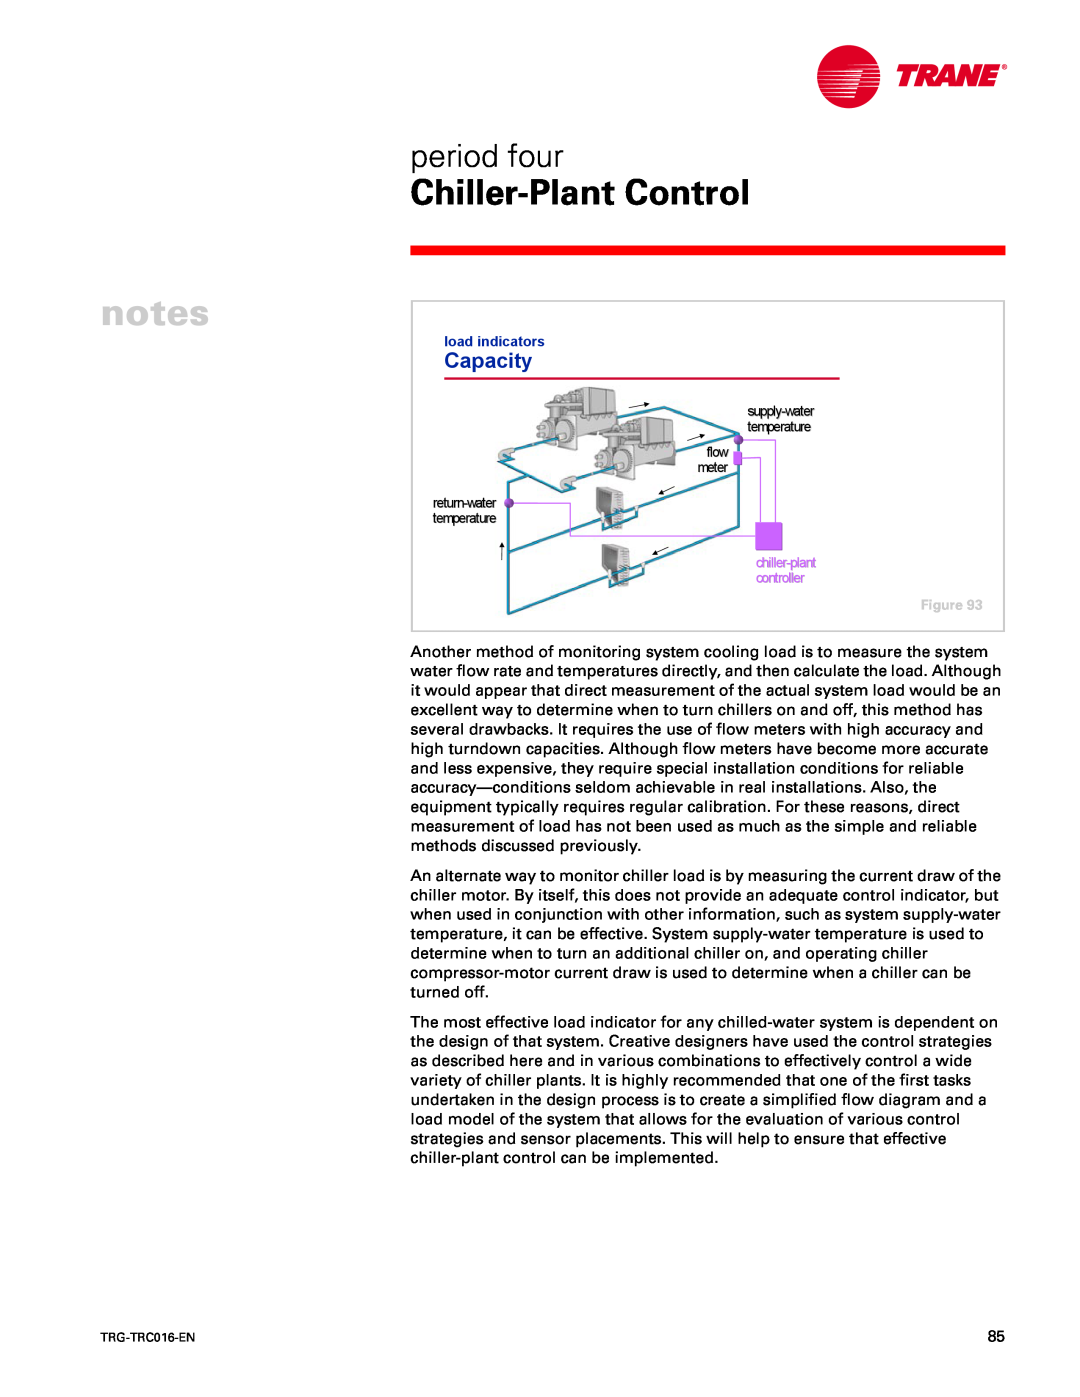 Trane TRG-TRC016-EN manual Capacity, notes, Chiller-PlantControl, period four 